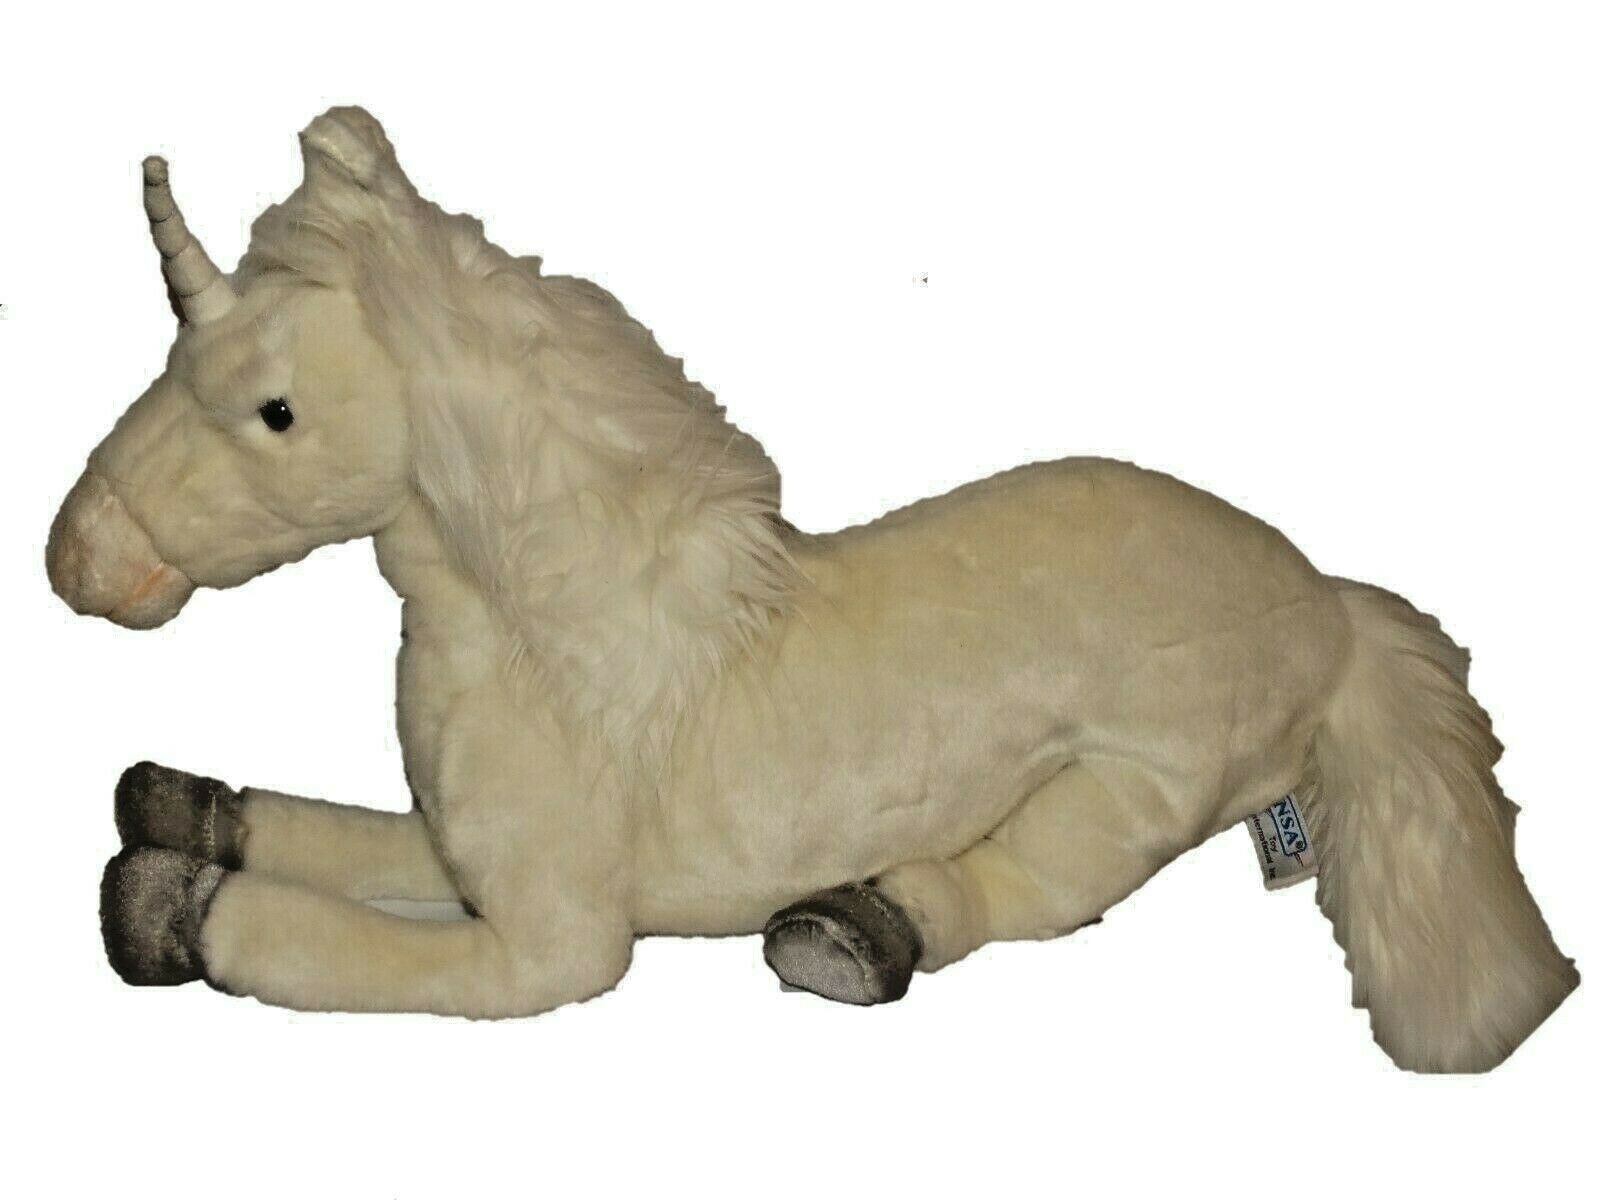 Nwt Hansa Life Like Handmade Stuffed Animal Plush White Unicorn Lying Floppy 17"